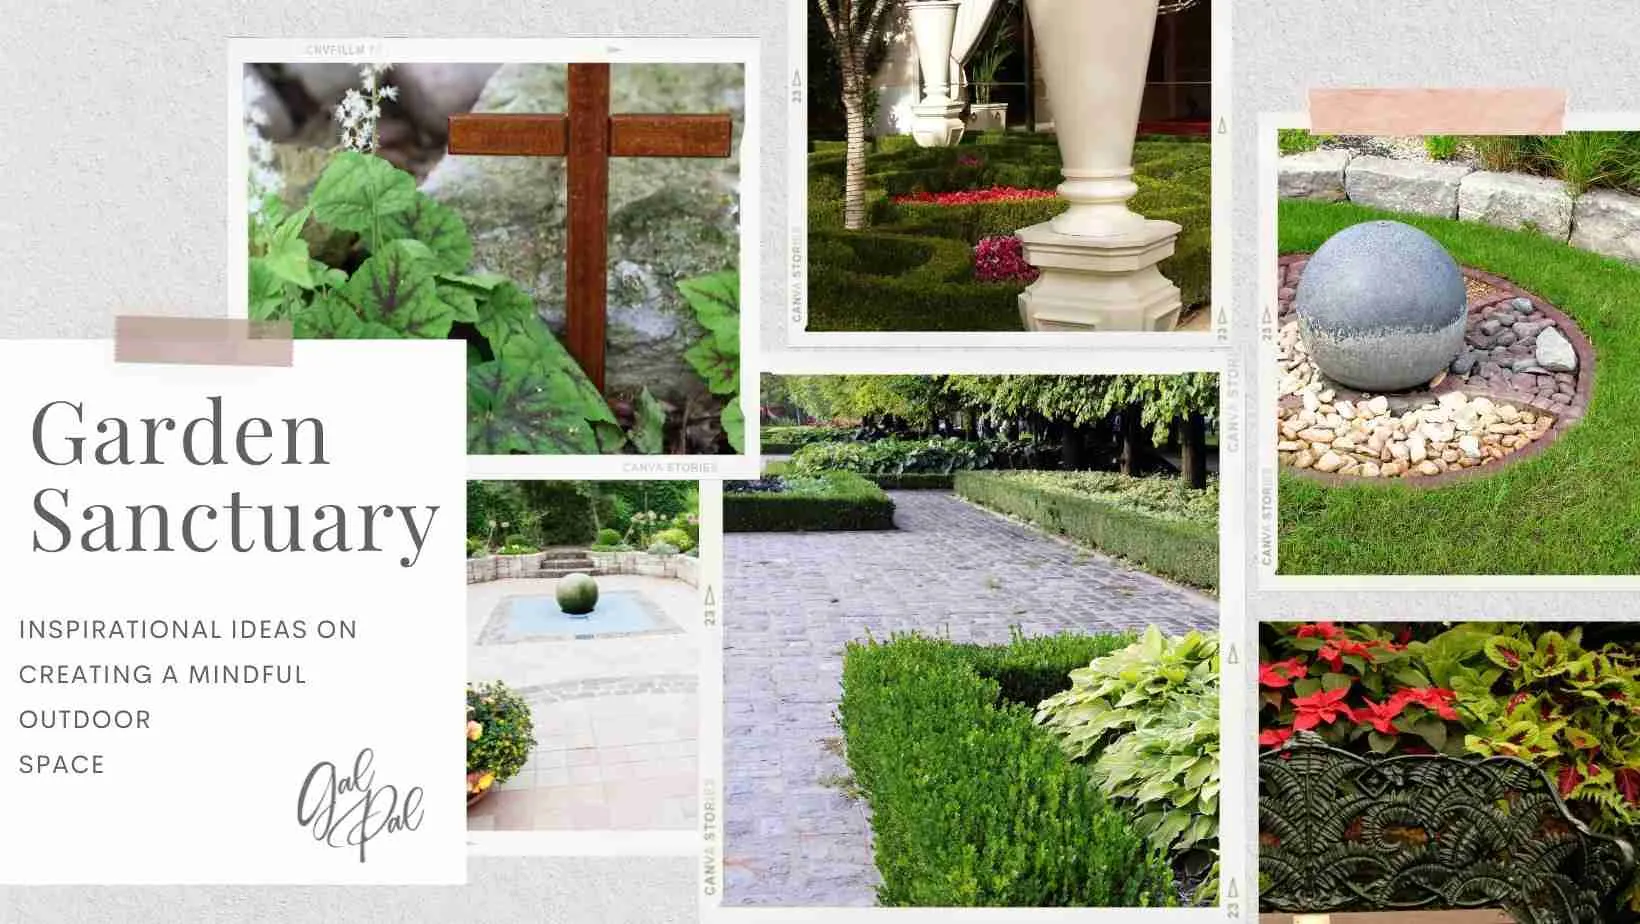 How to create a garden santuary